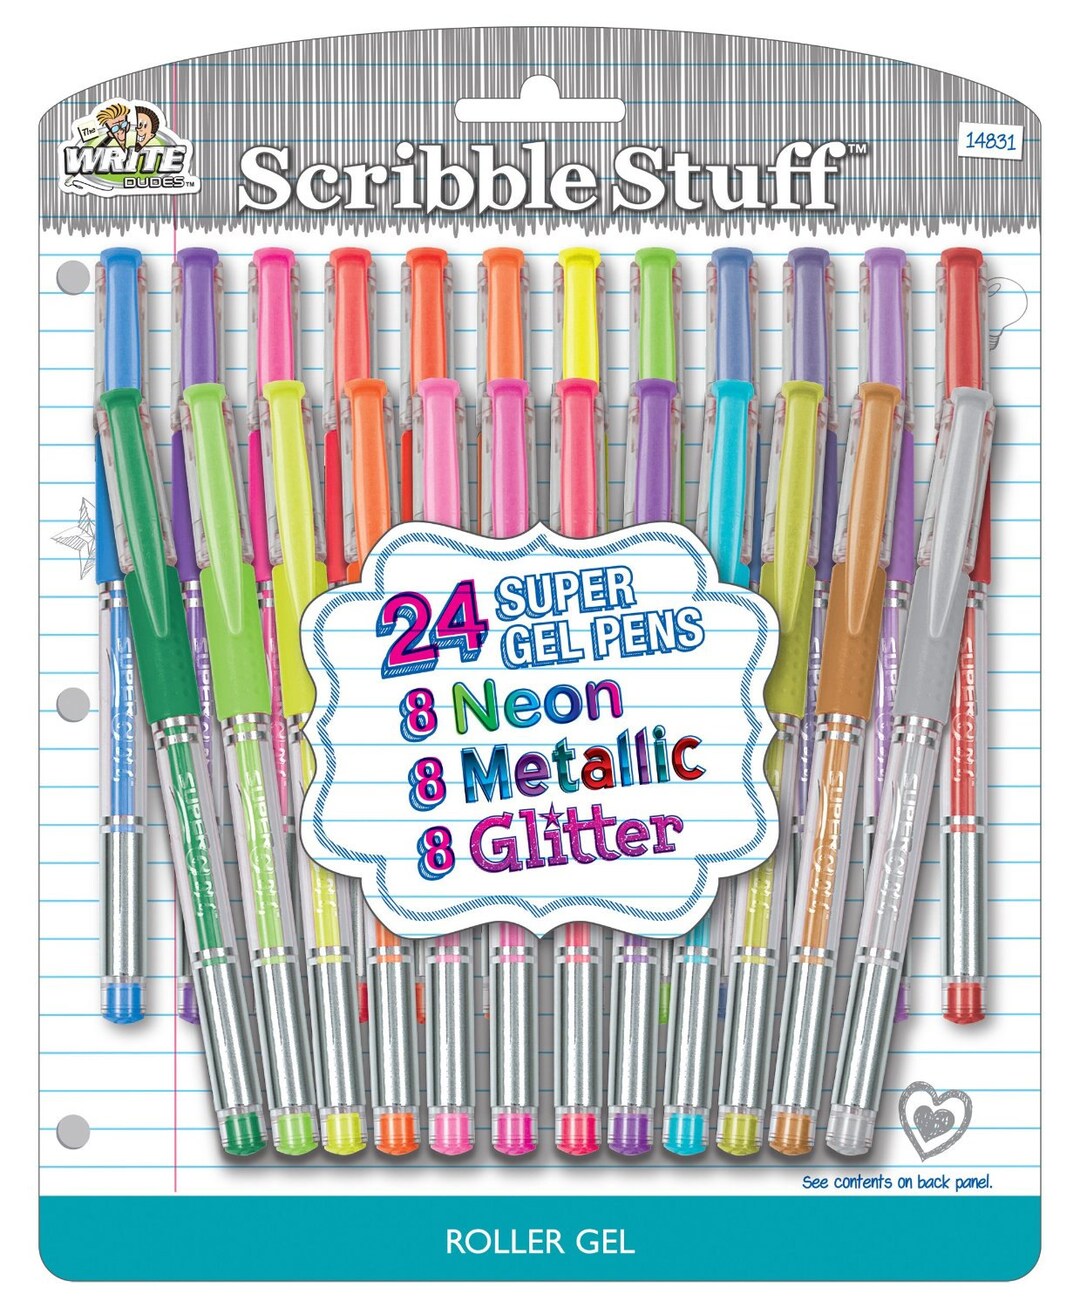 Felt Tip Pens Markers Assorted Colors by Scribble Stuff School